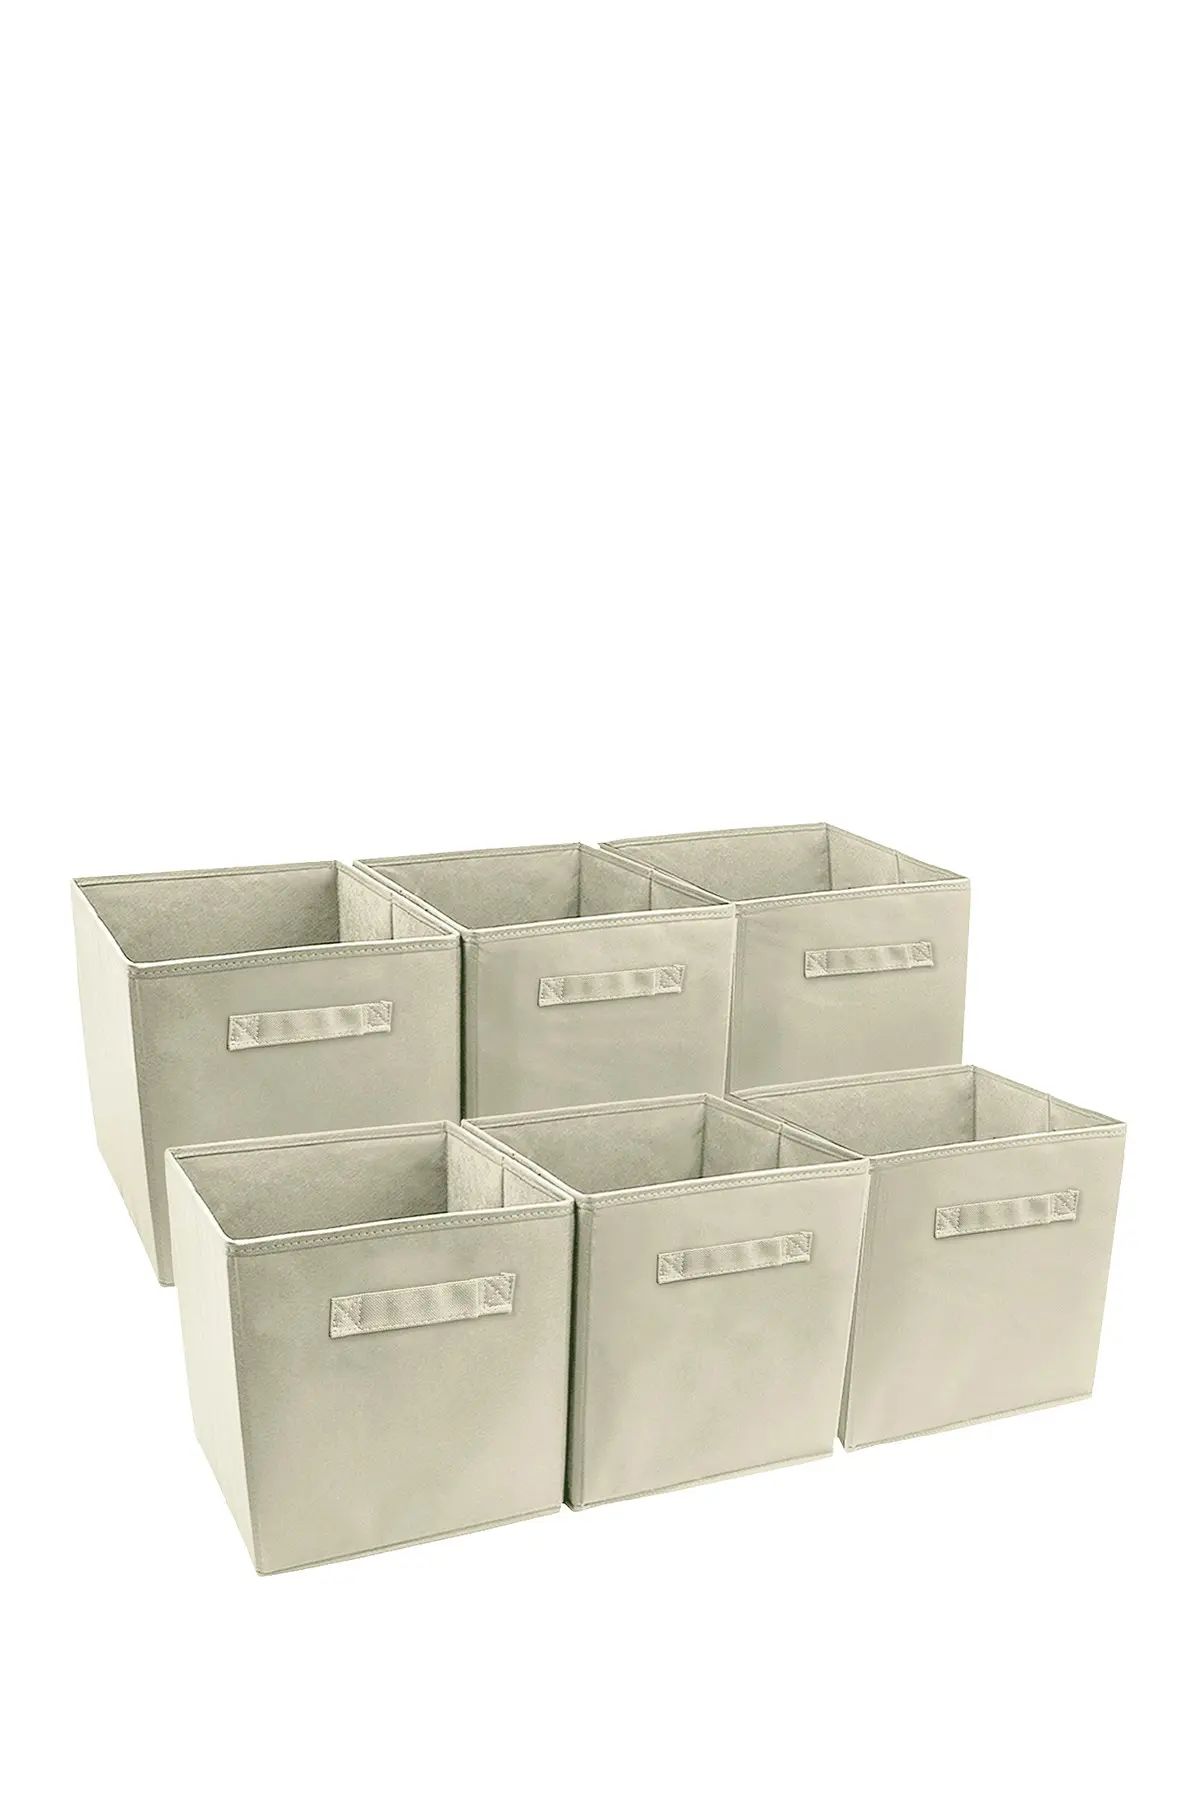 Sorbus Foldable Storage Cube Basket Bin - Set of 6 - Beige at Nordstrom Rack | Nordstrom Rack